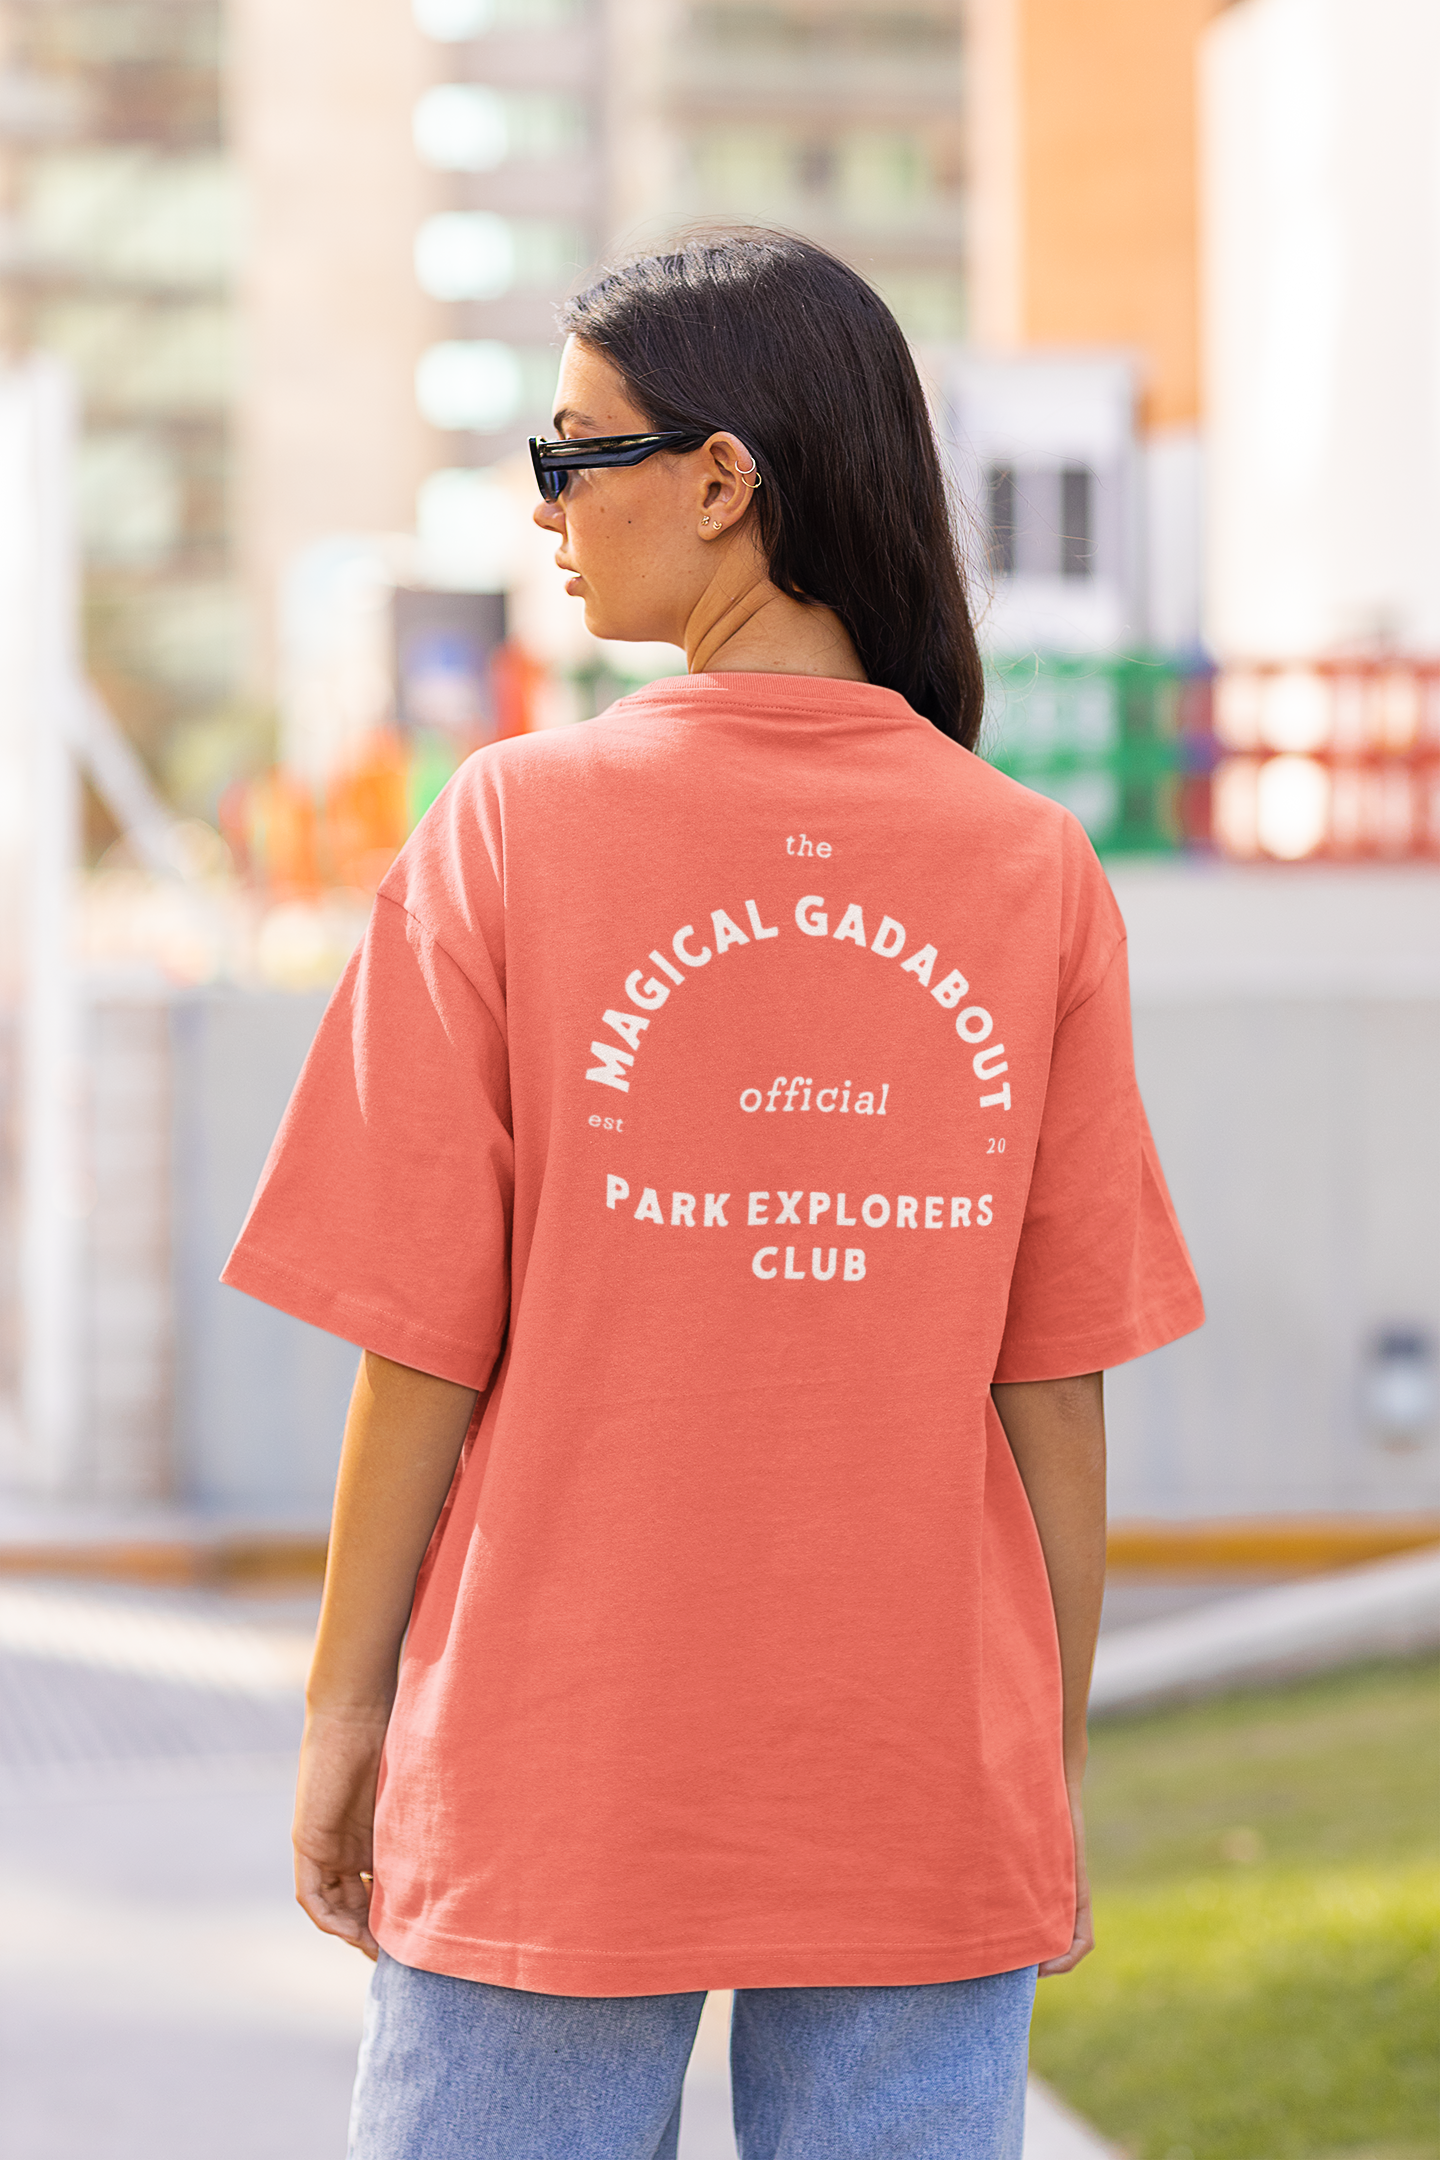 Magical Gadabout Park Explorers Club Shirt